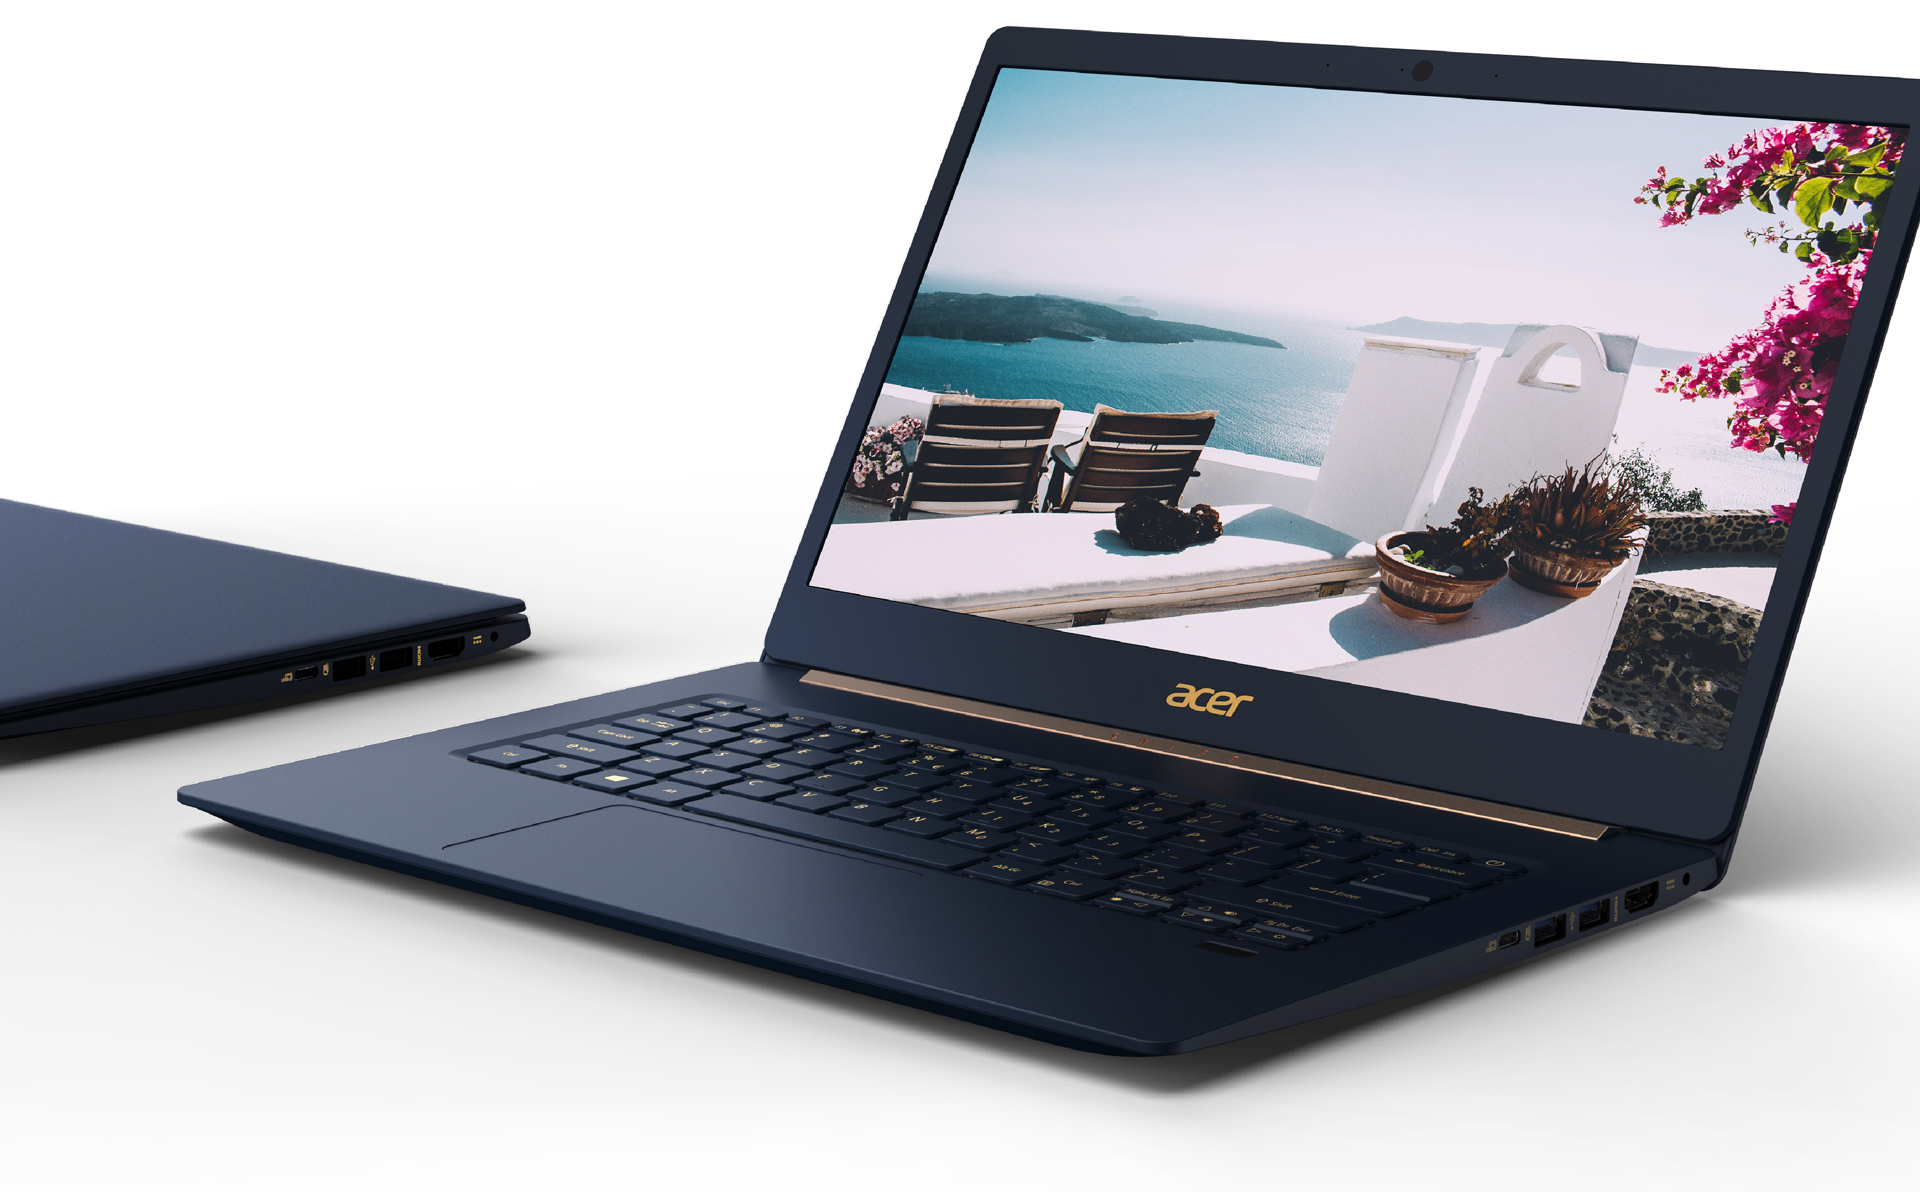 Acer makes world’s lightest 15-inch PC laptop, Swift 5